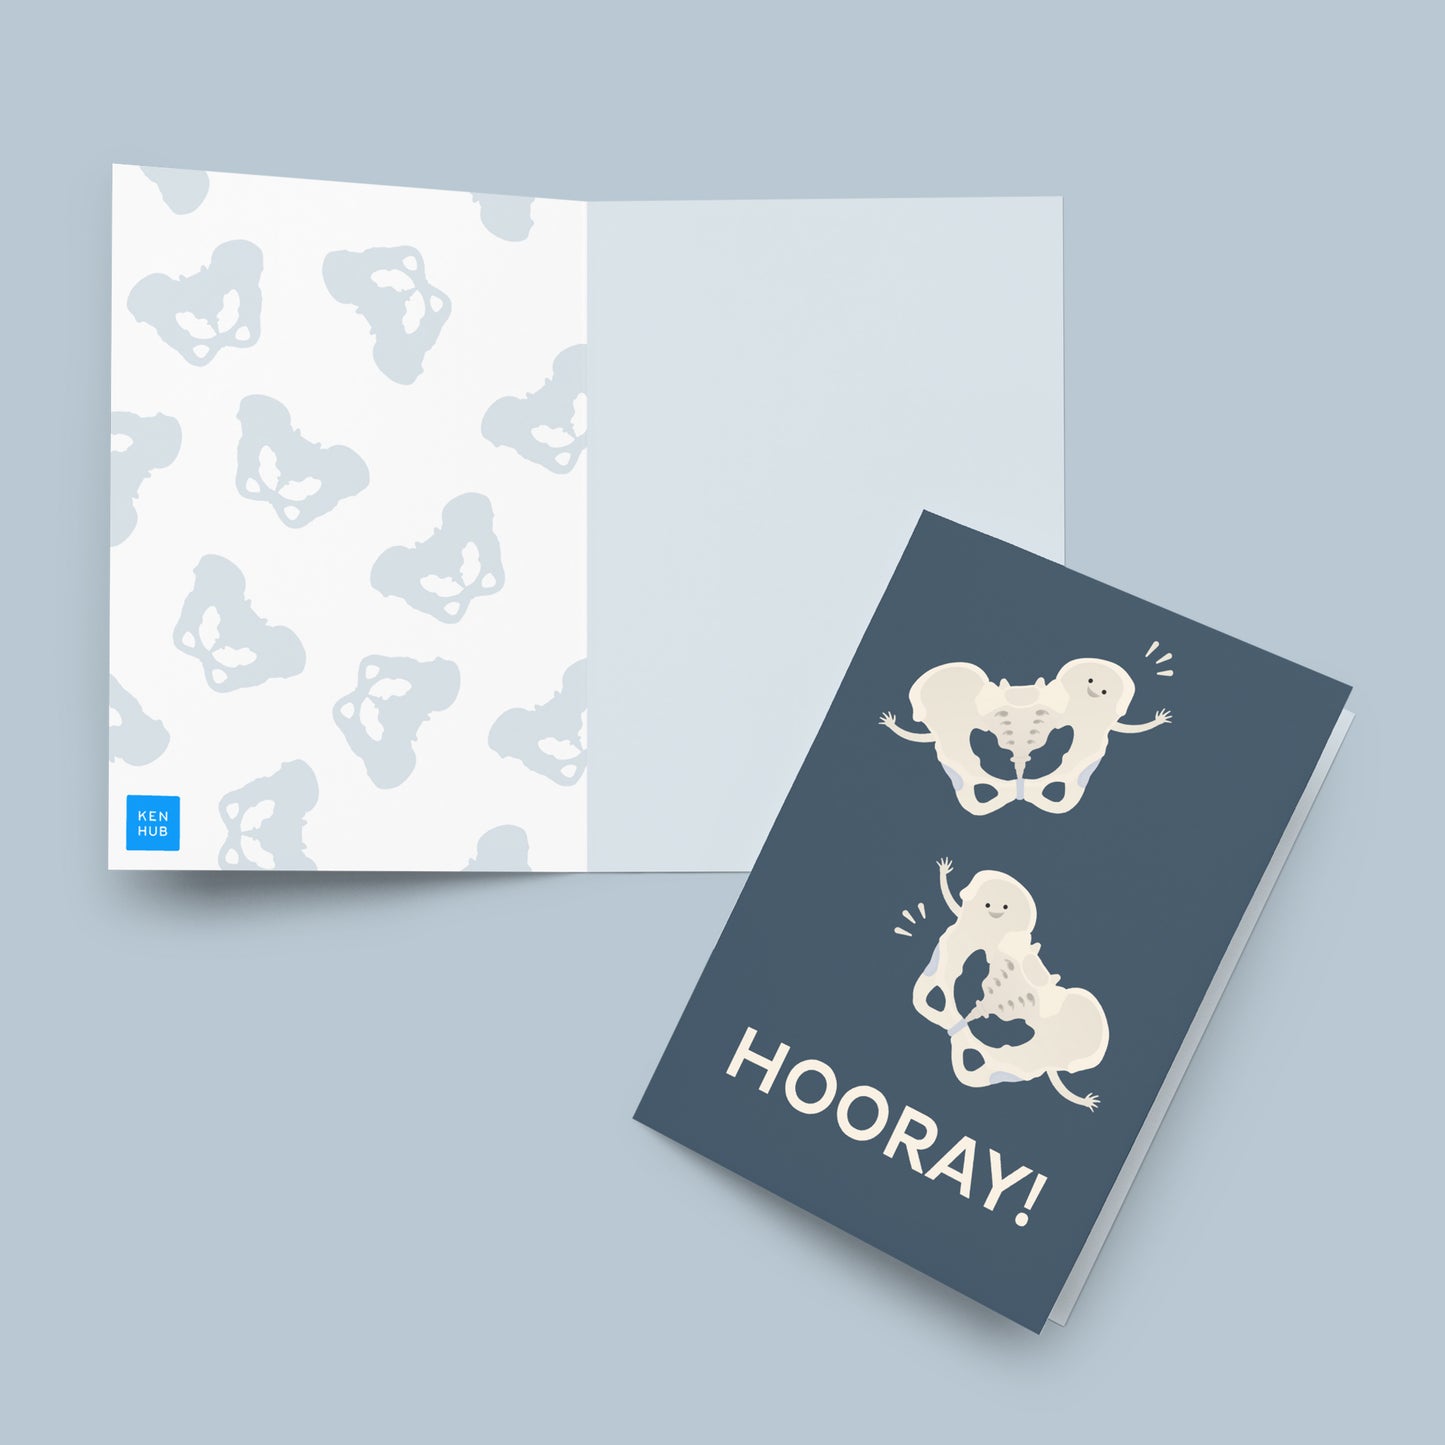 Hip Hip Hooray - Greeting card